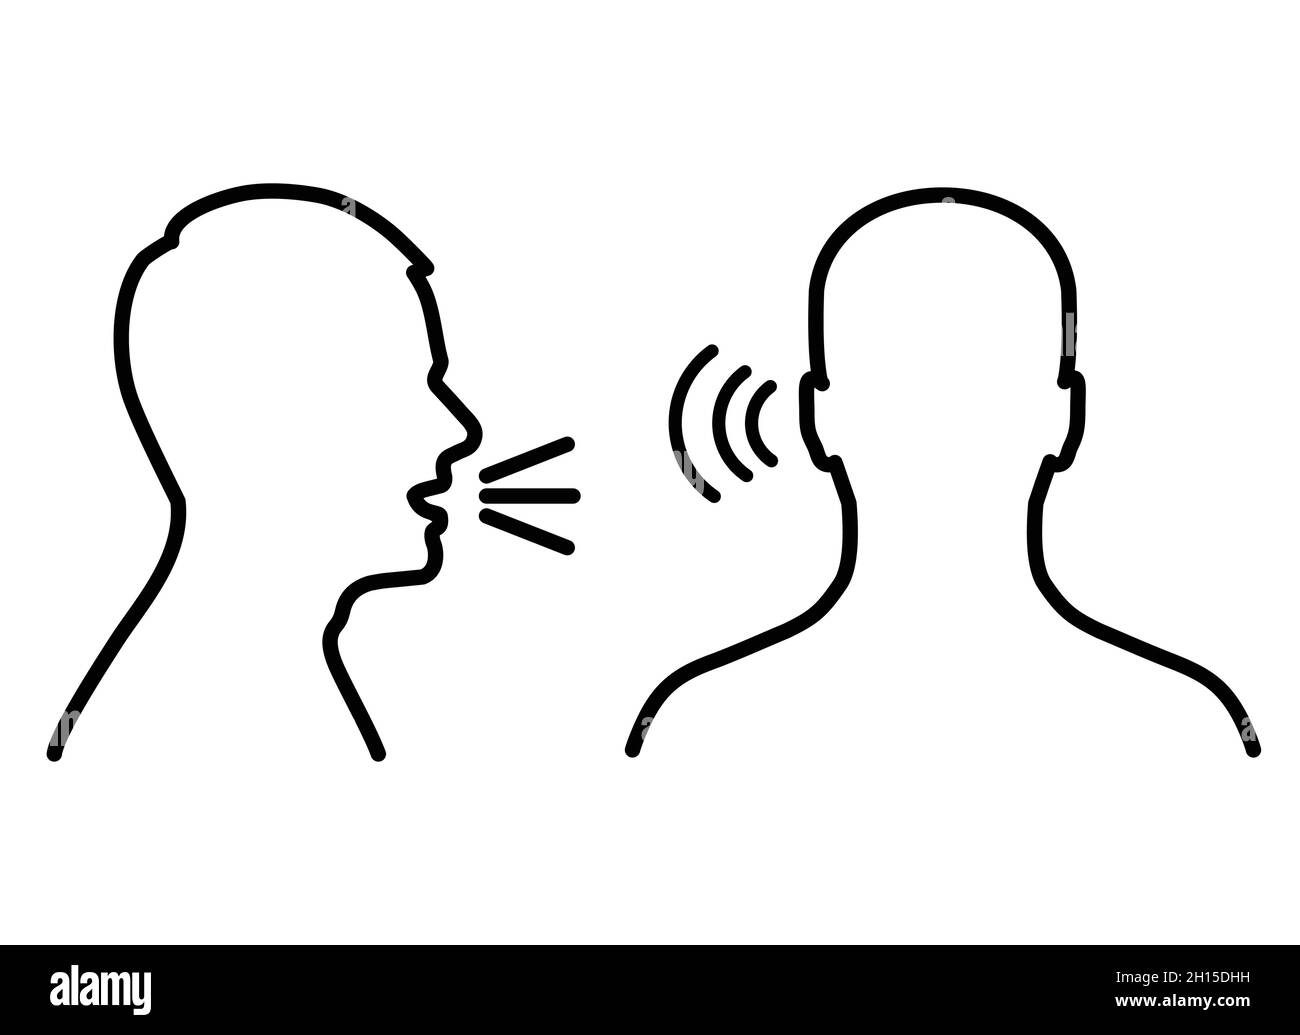 listen and speak icon, voice or sound symbol Stock Vector